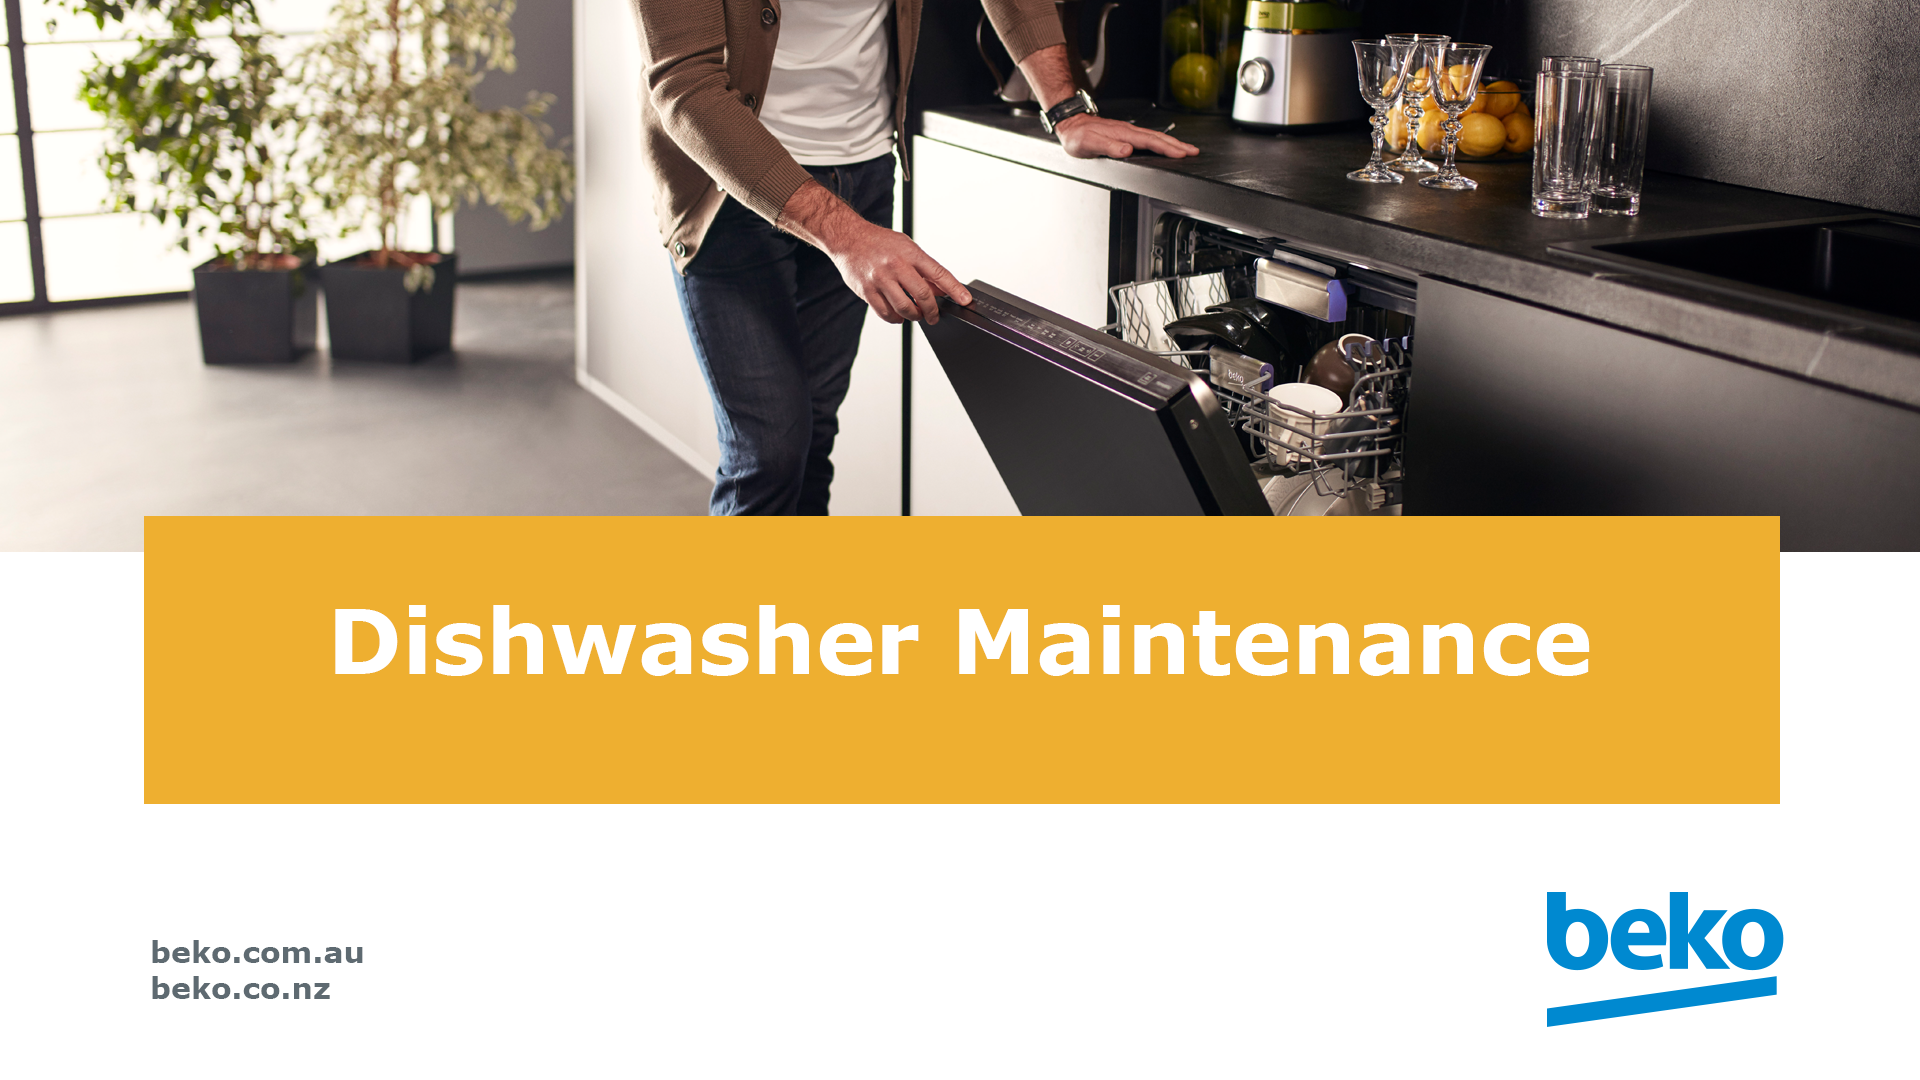 Dishwasher Maintenance Video